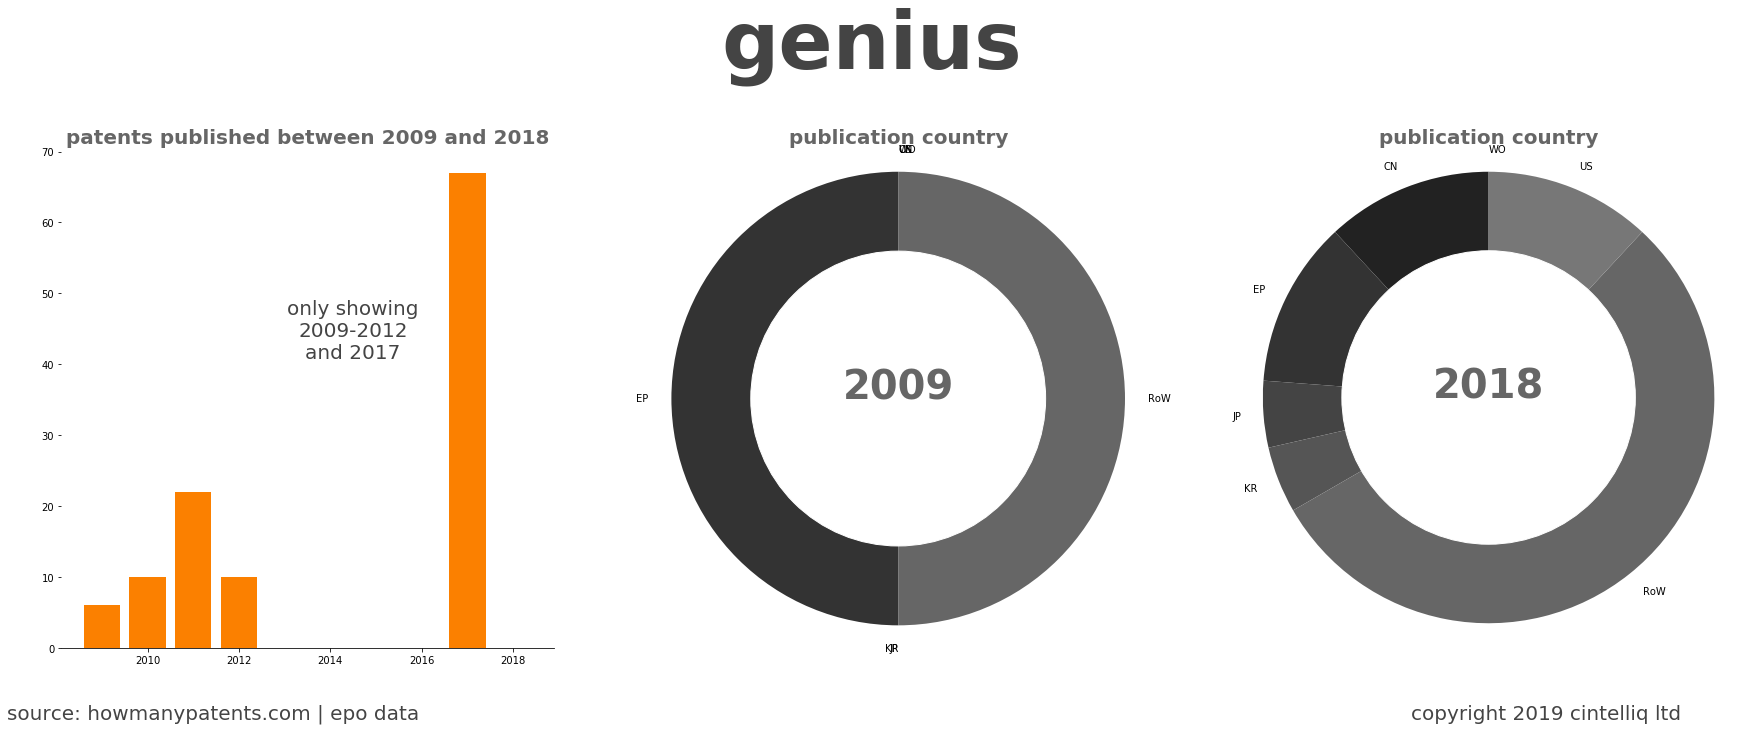 summary of patents for Genius